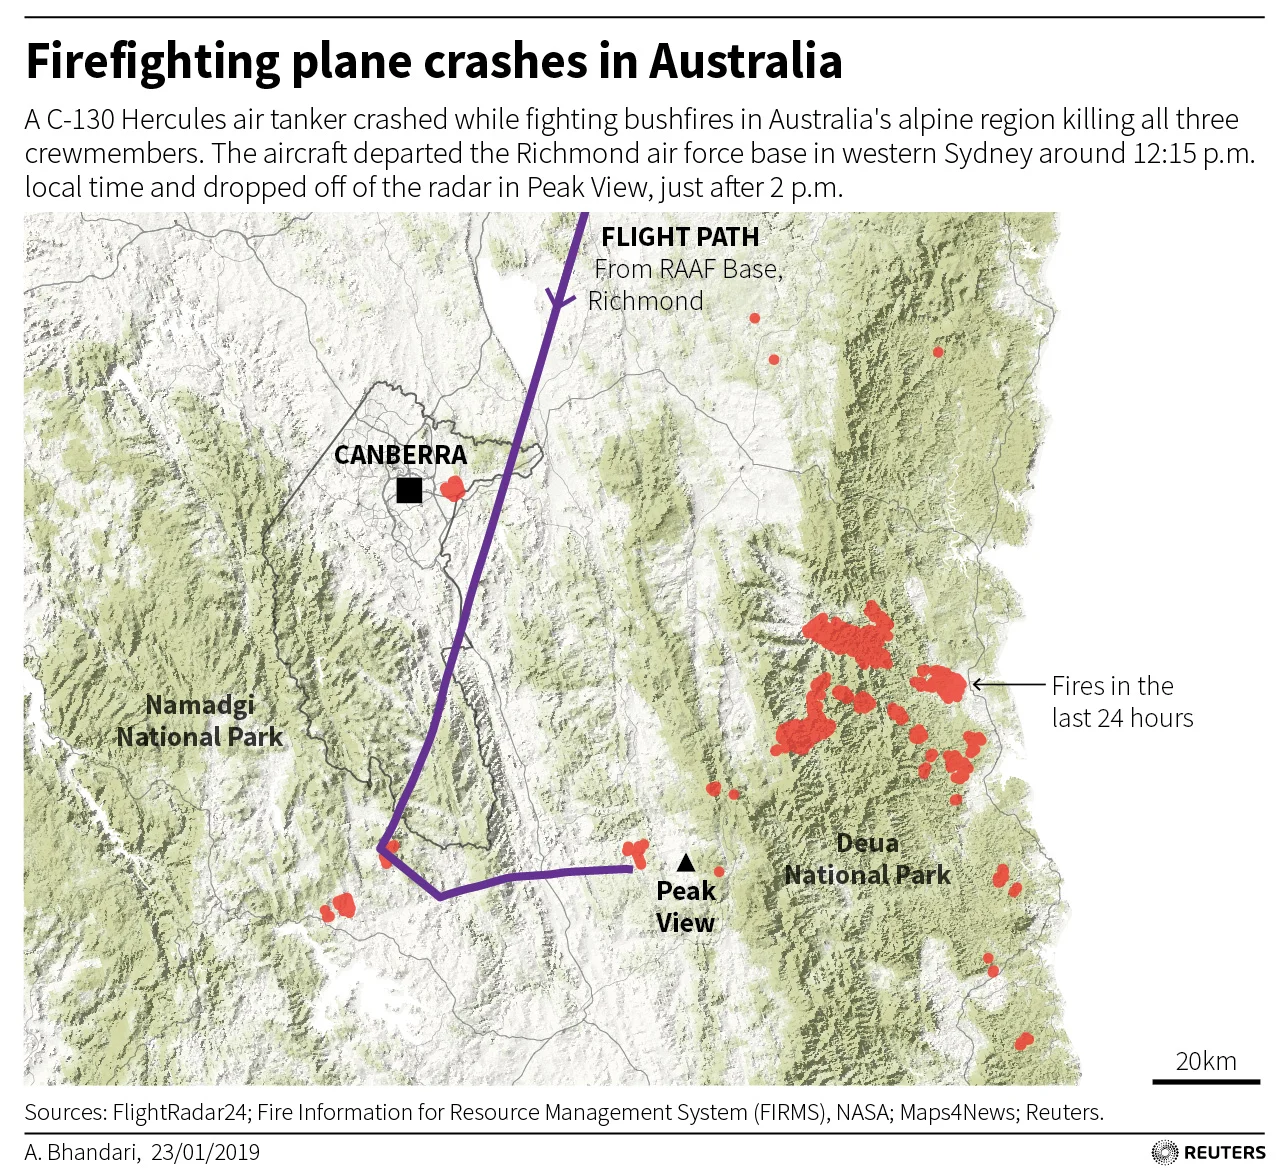 REUTERS: Firefighting plane crashes in Australia EPS C